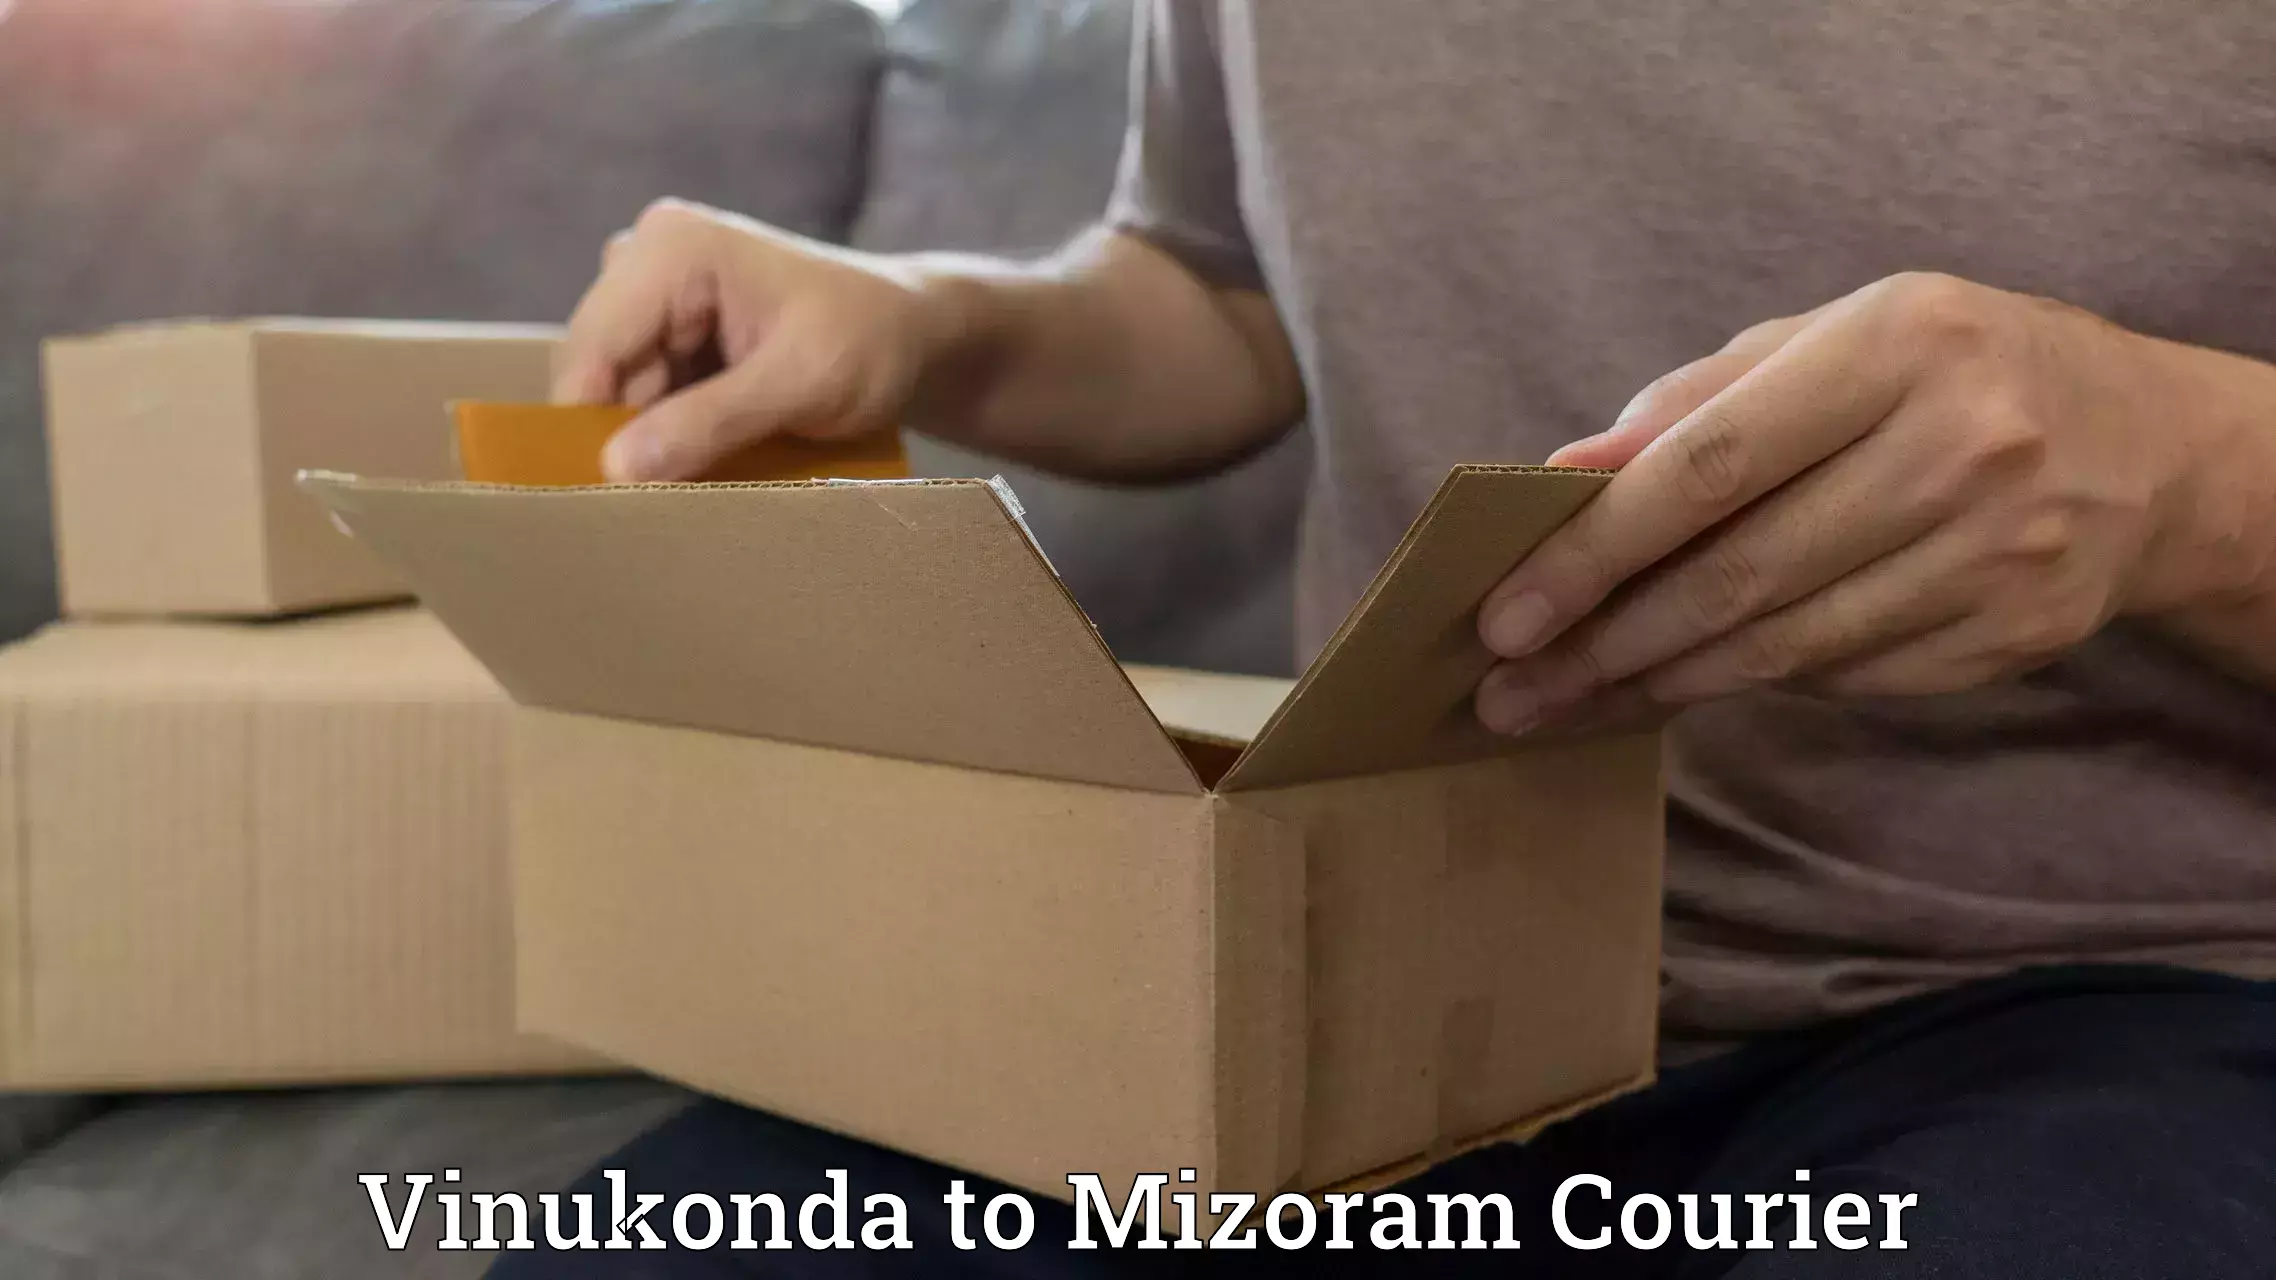 Professional courier handling in Vinukonda to Mizoram